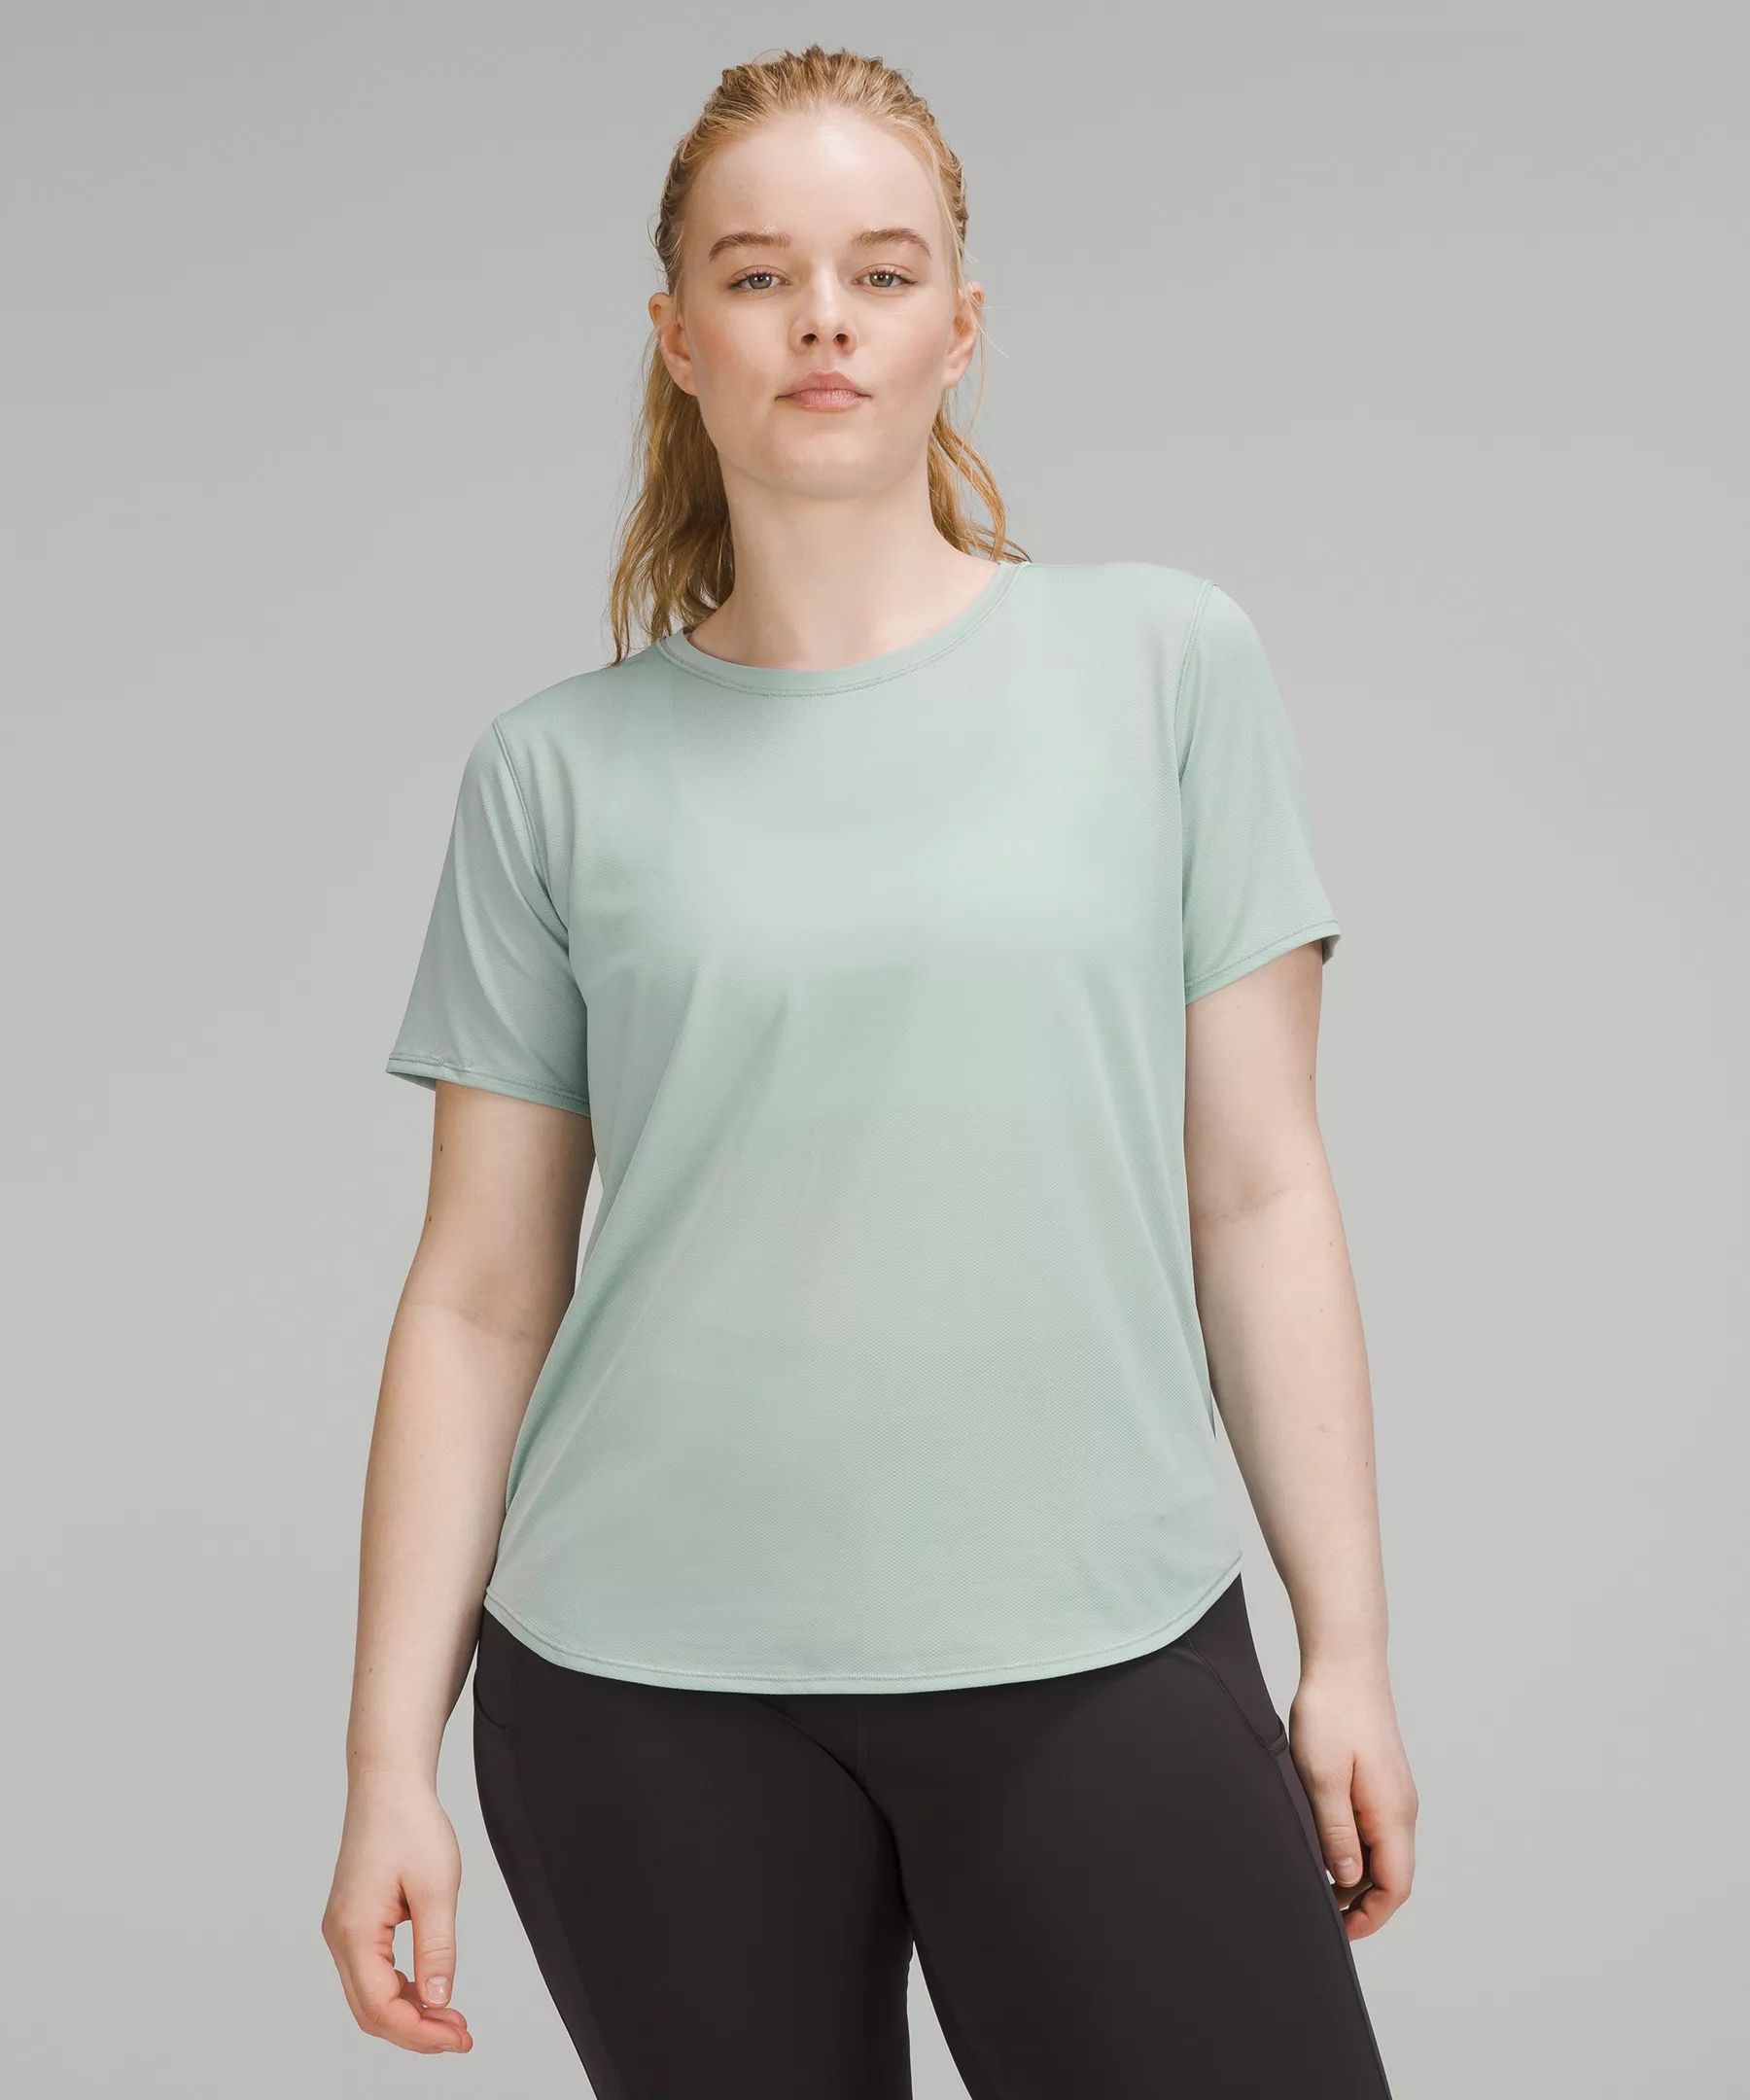 High Neck Running and Training T-Shirt | Women's Short Sleeve Shirts & Tee's | lululemon | Lululemon (US)